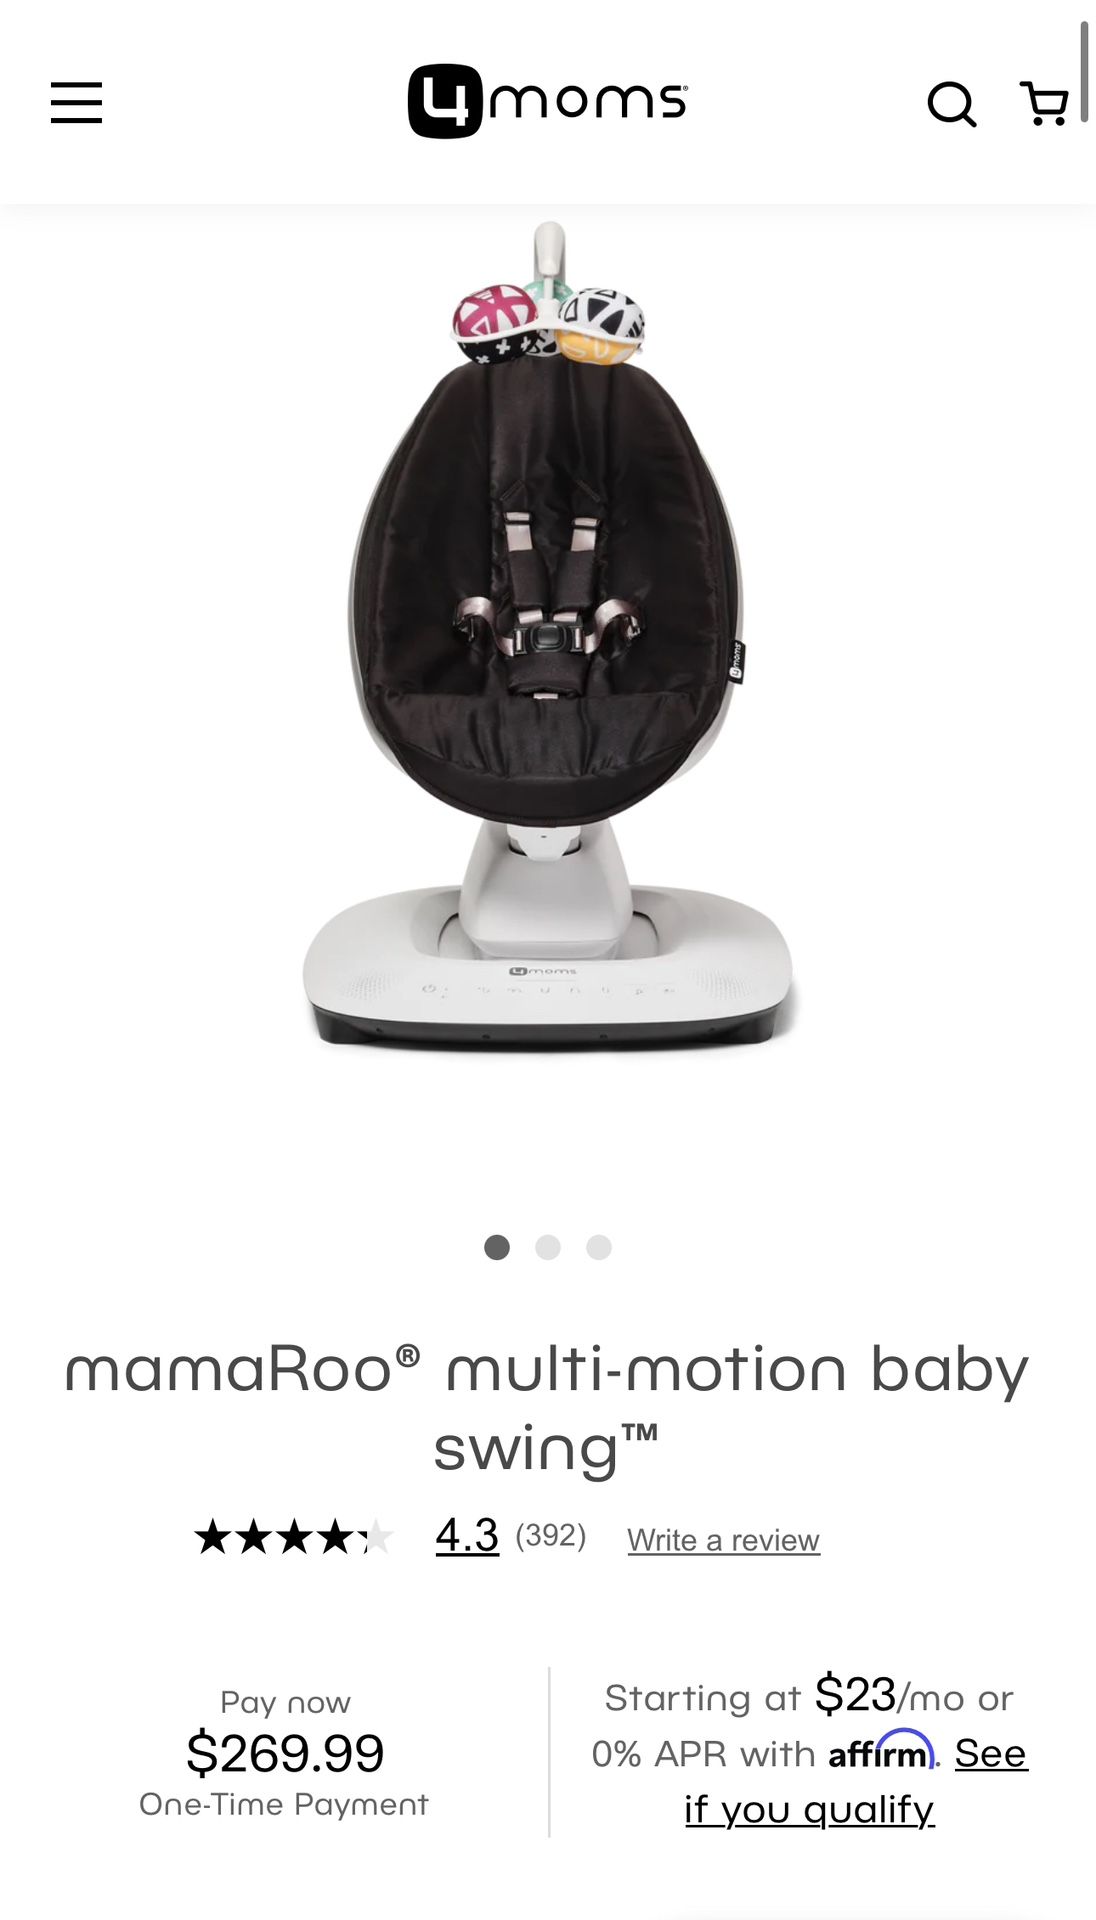 mamaRoo multi-motion baby swing